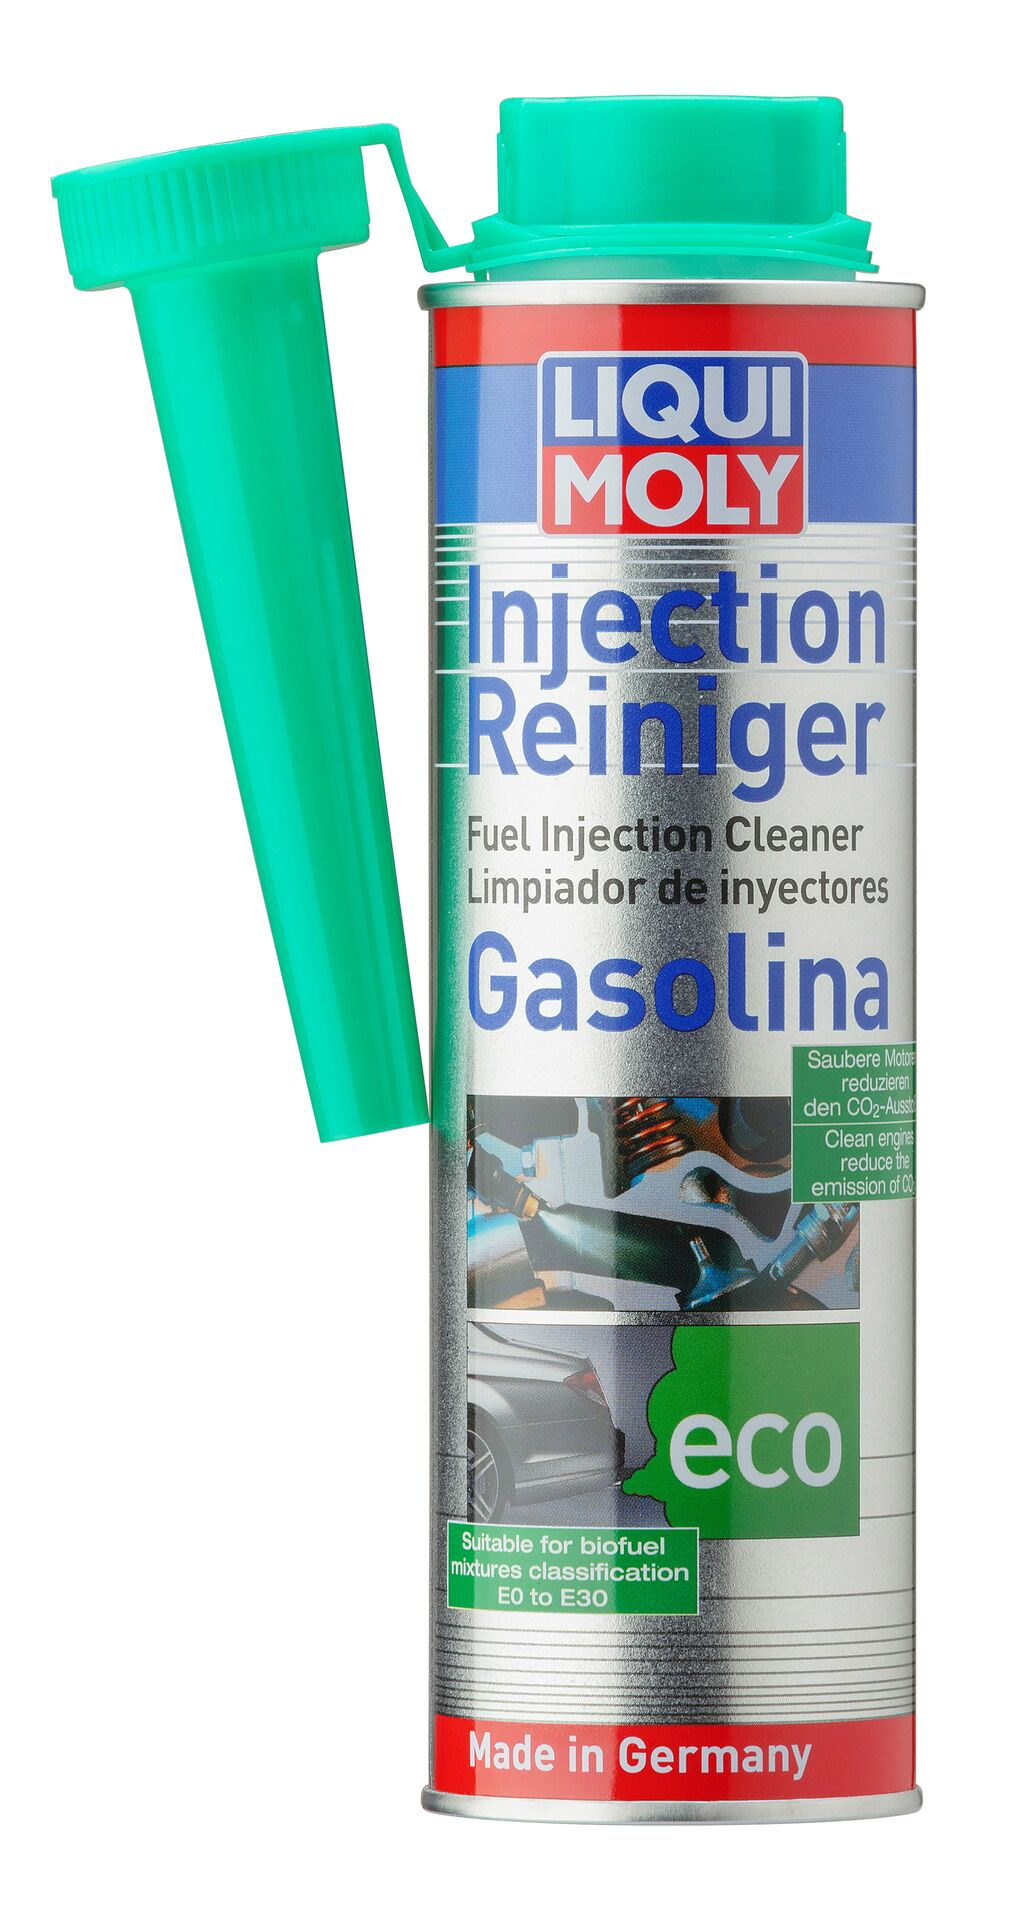 Liqui Moly Injection Reiniger - Limpiador de Inyectores de 300 mL